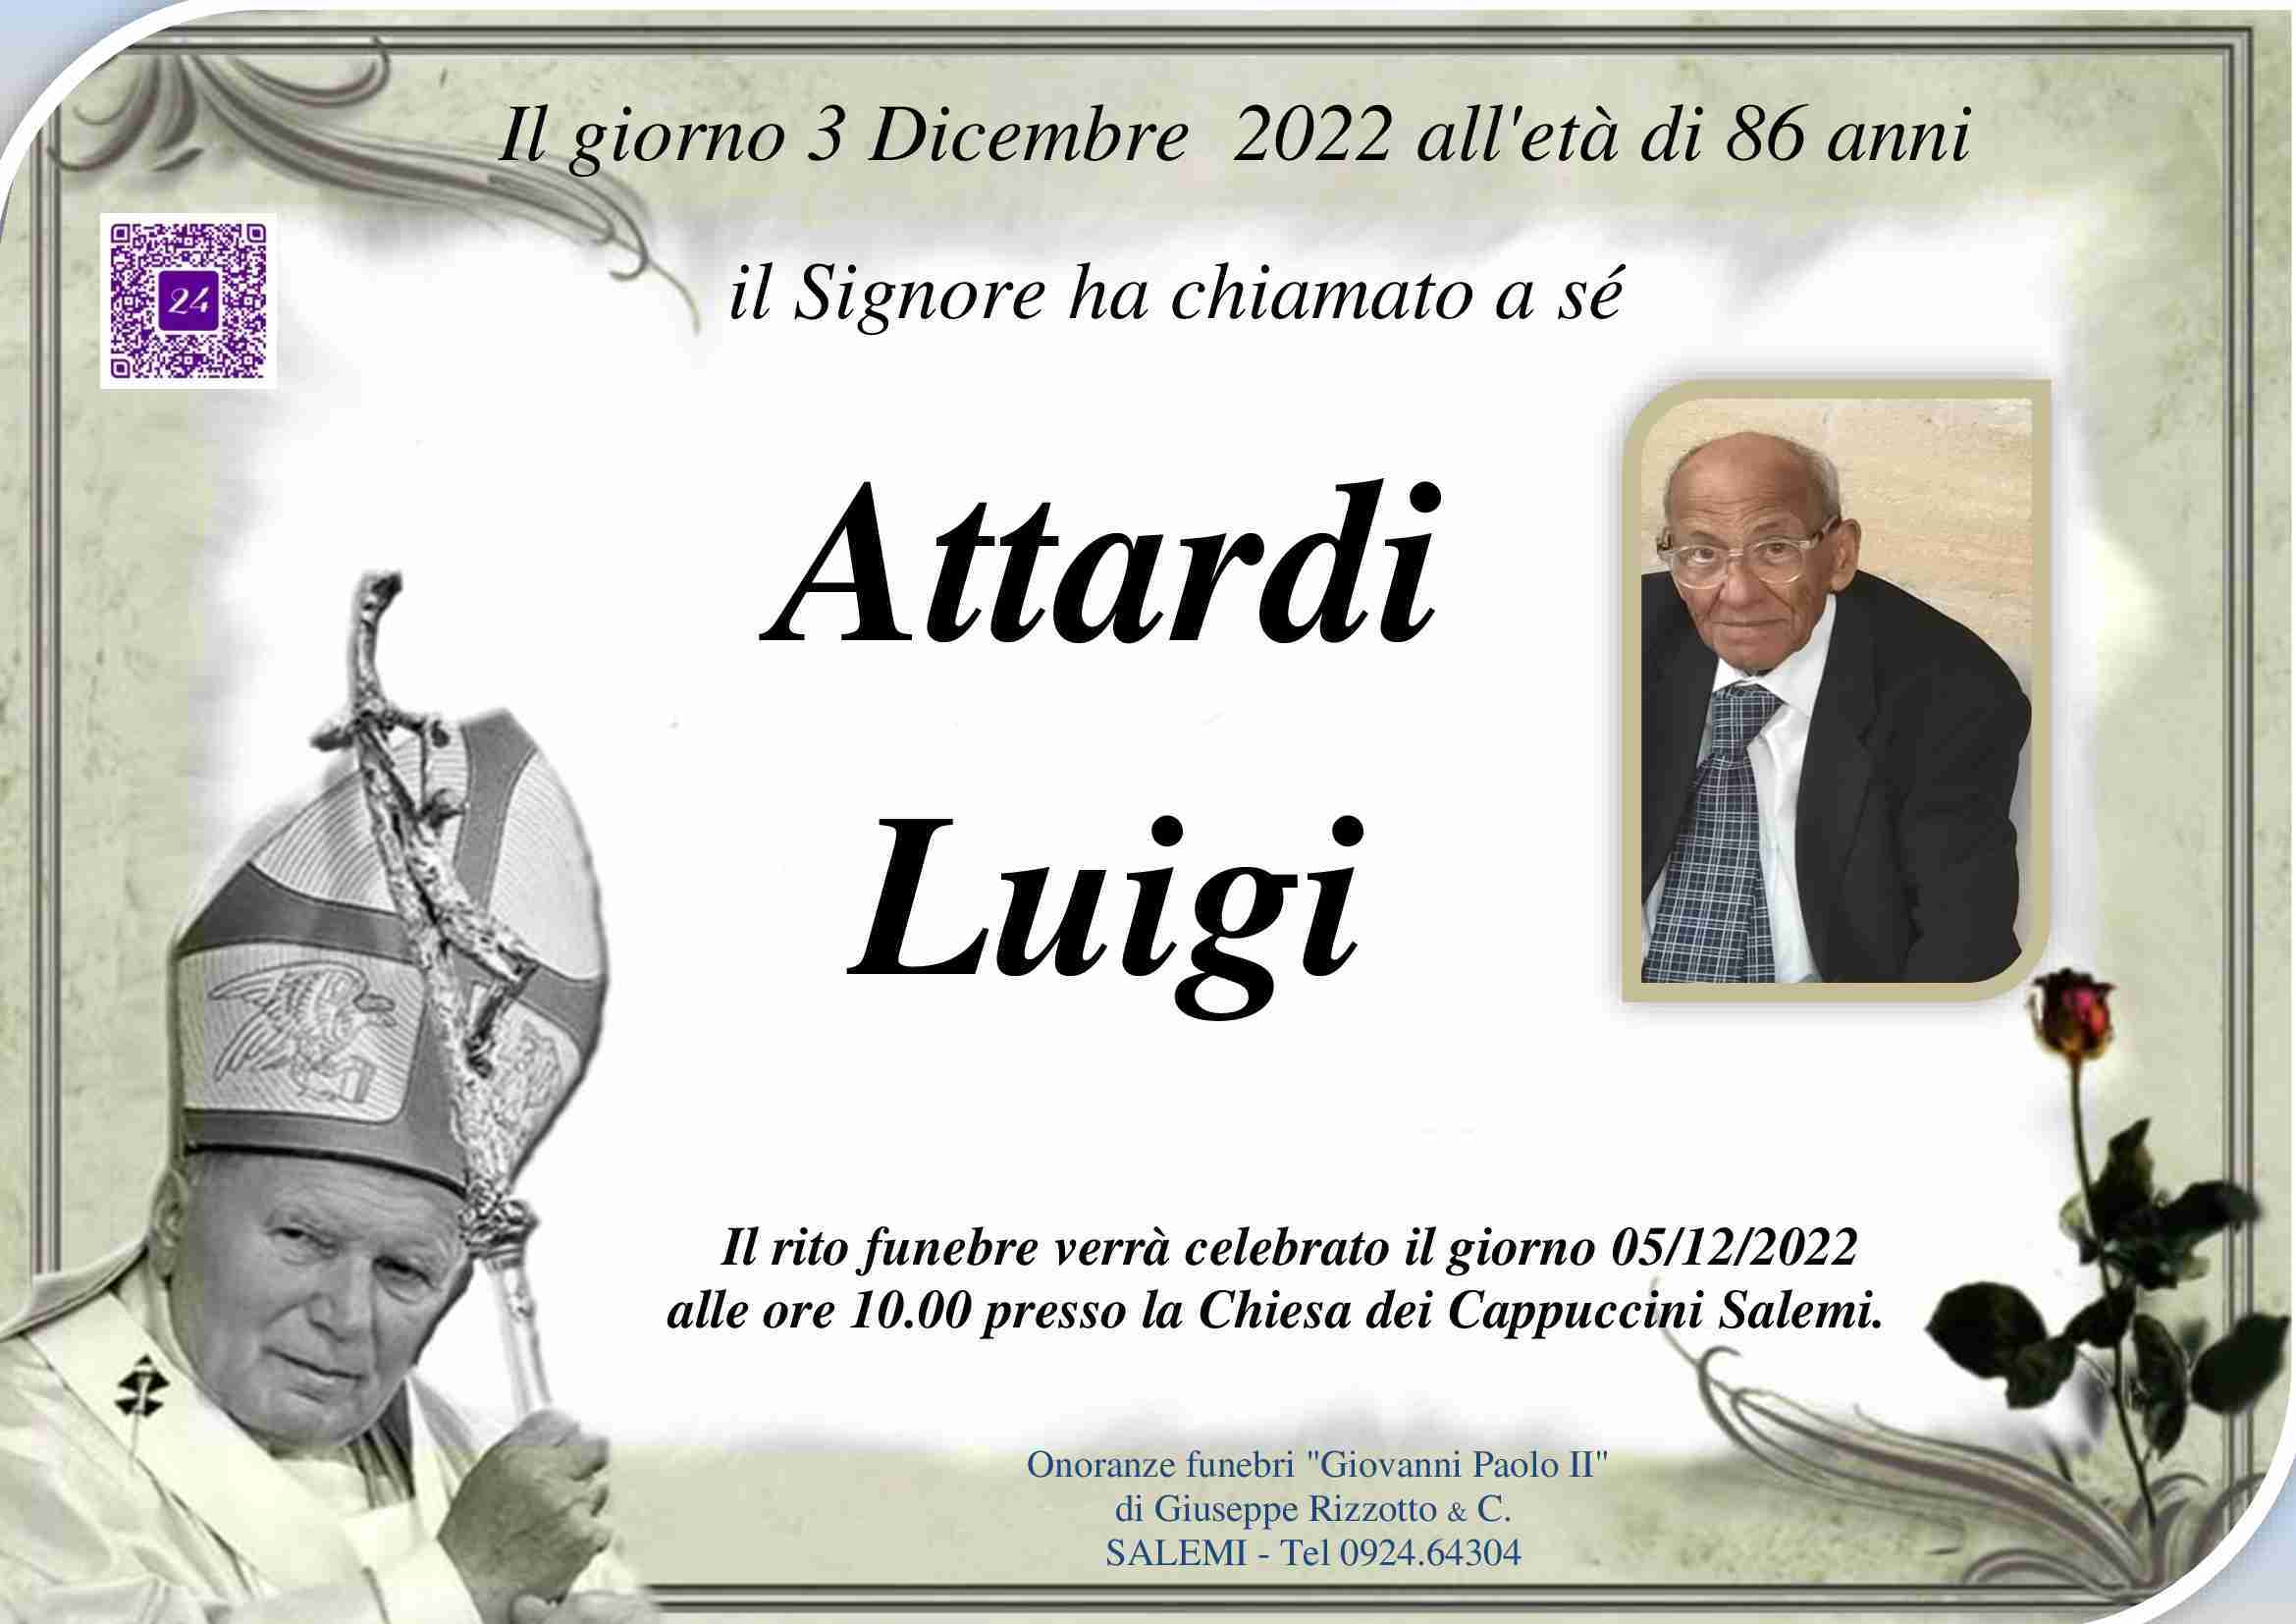 Luigi Attardi